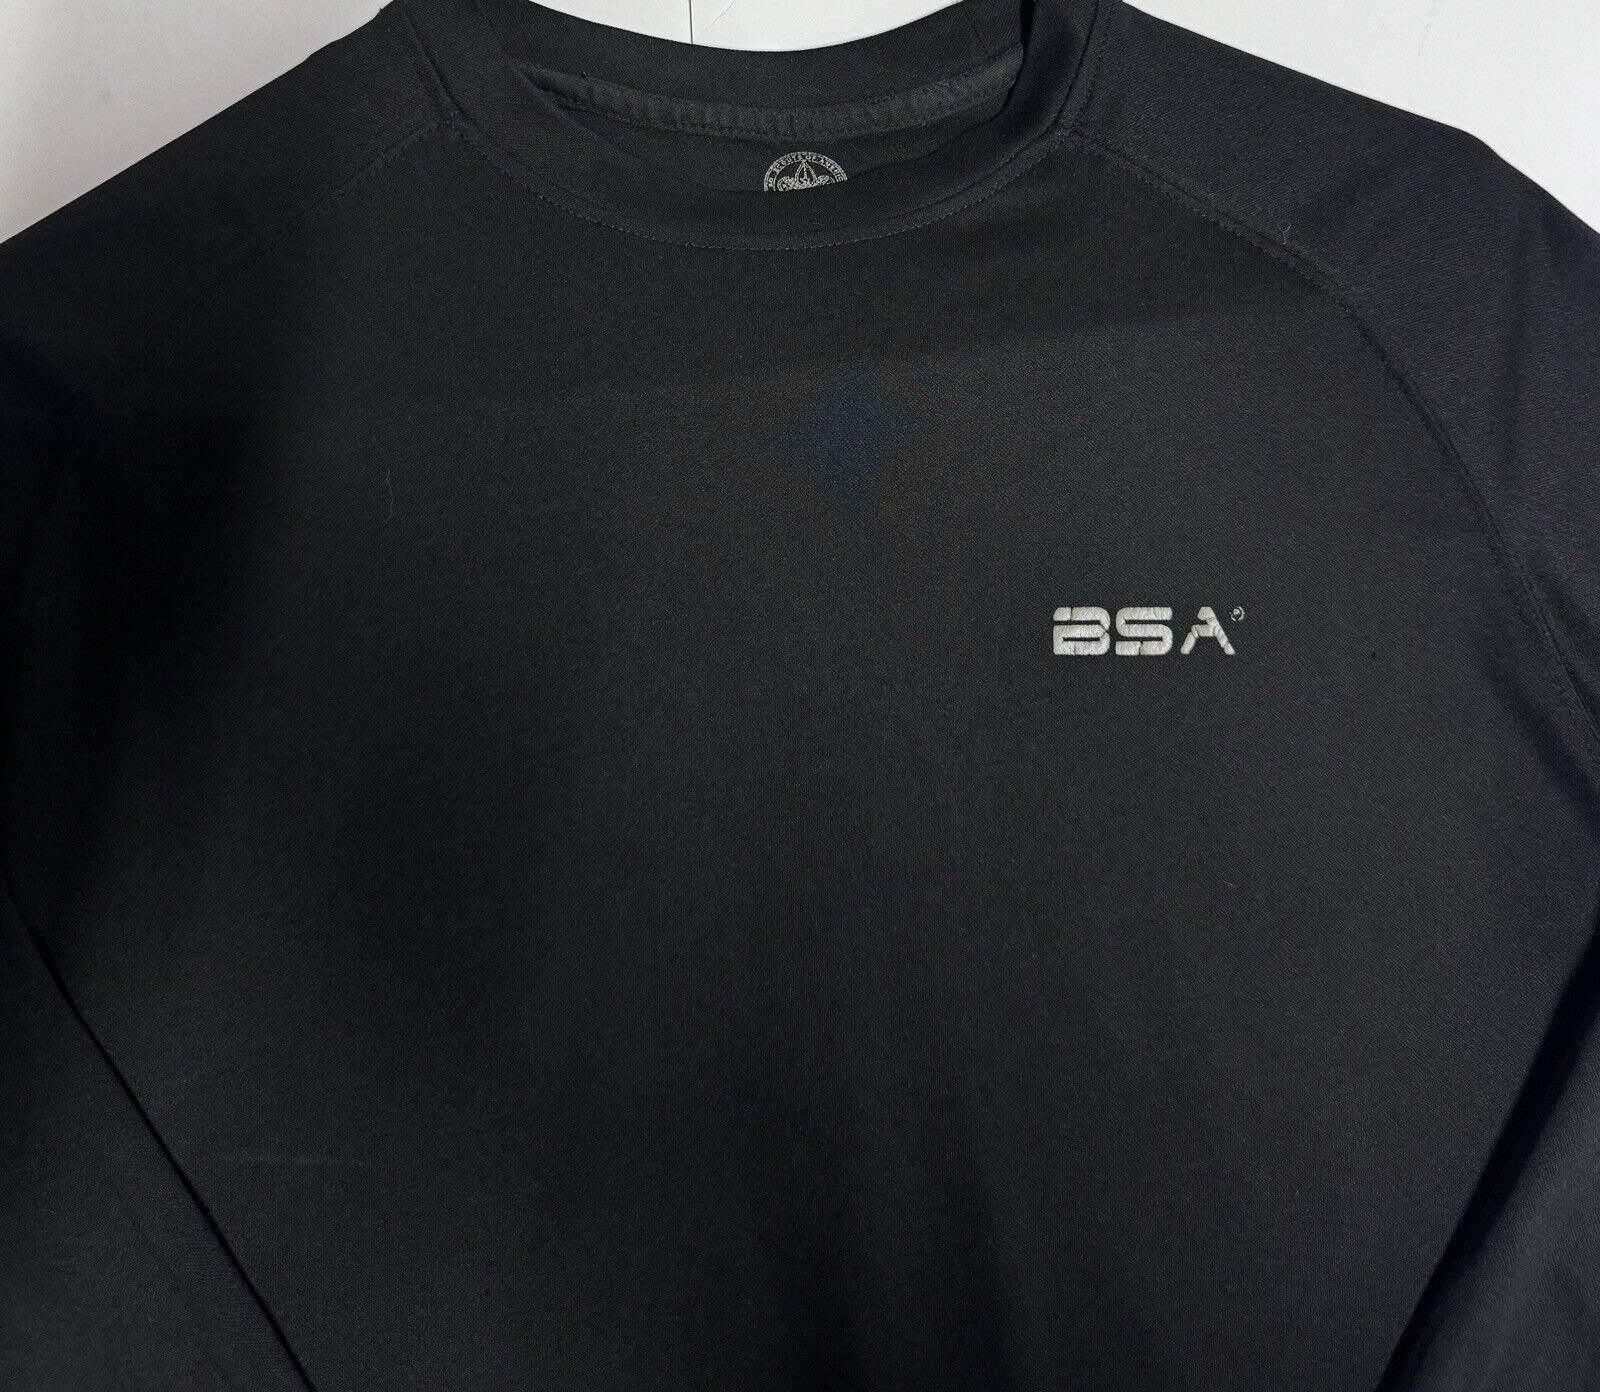 Cub Scouts BSA Small 100% Polyester Long Sleeve T-Shirt Black Swim Shirt